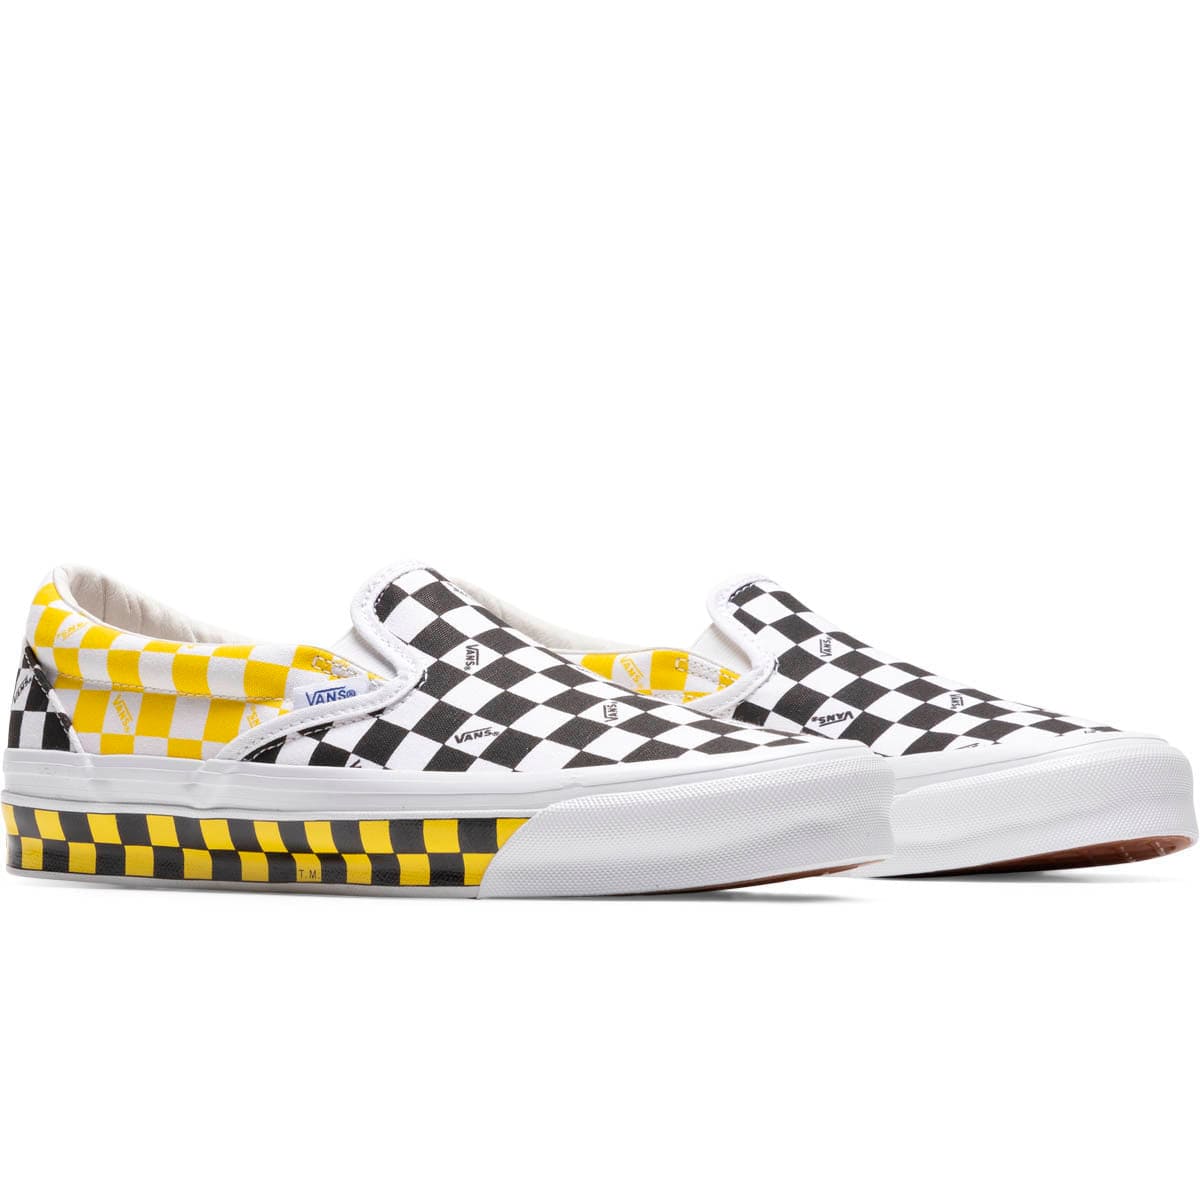 Vans Yellow Classic Checkerboard Slip-On Sneakers